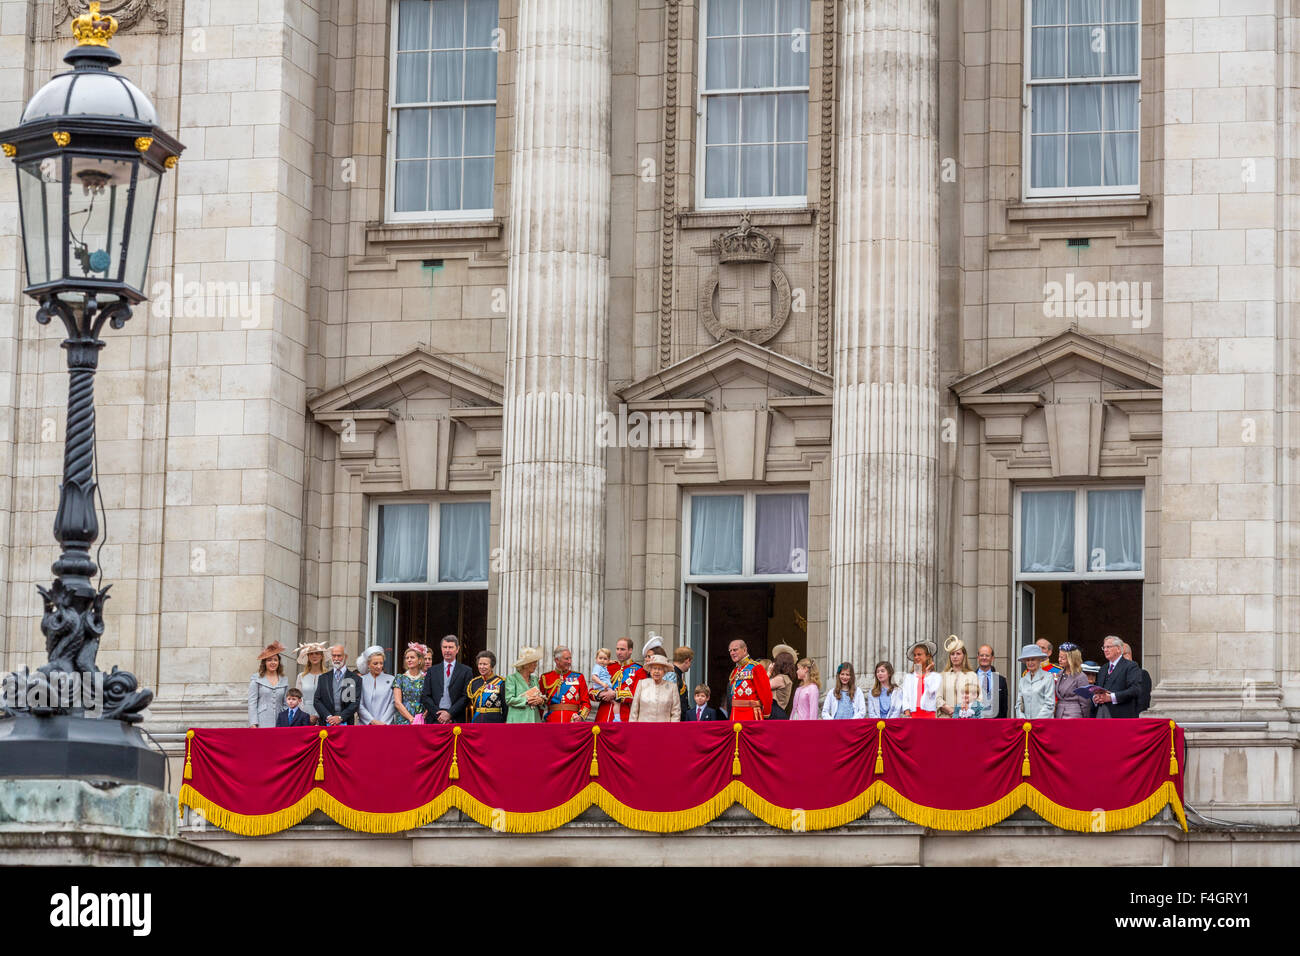 The Royal Family on the Balcony of Buckingham Palace Stock Photo